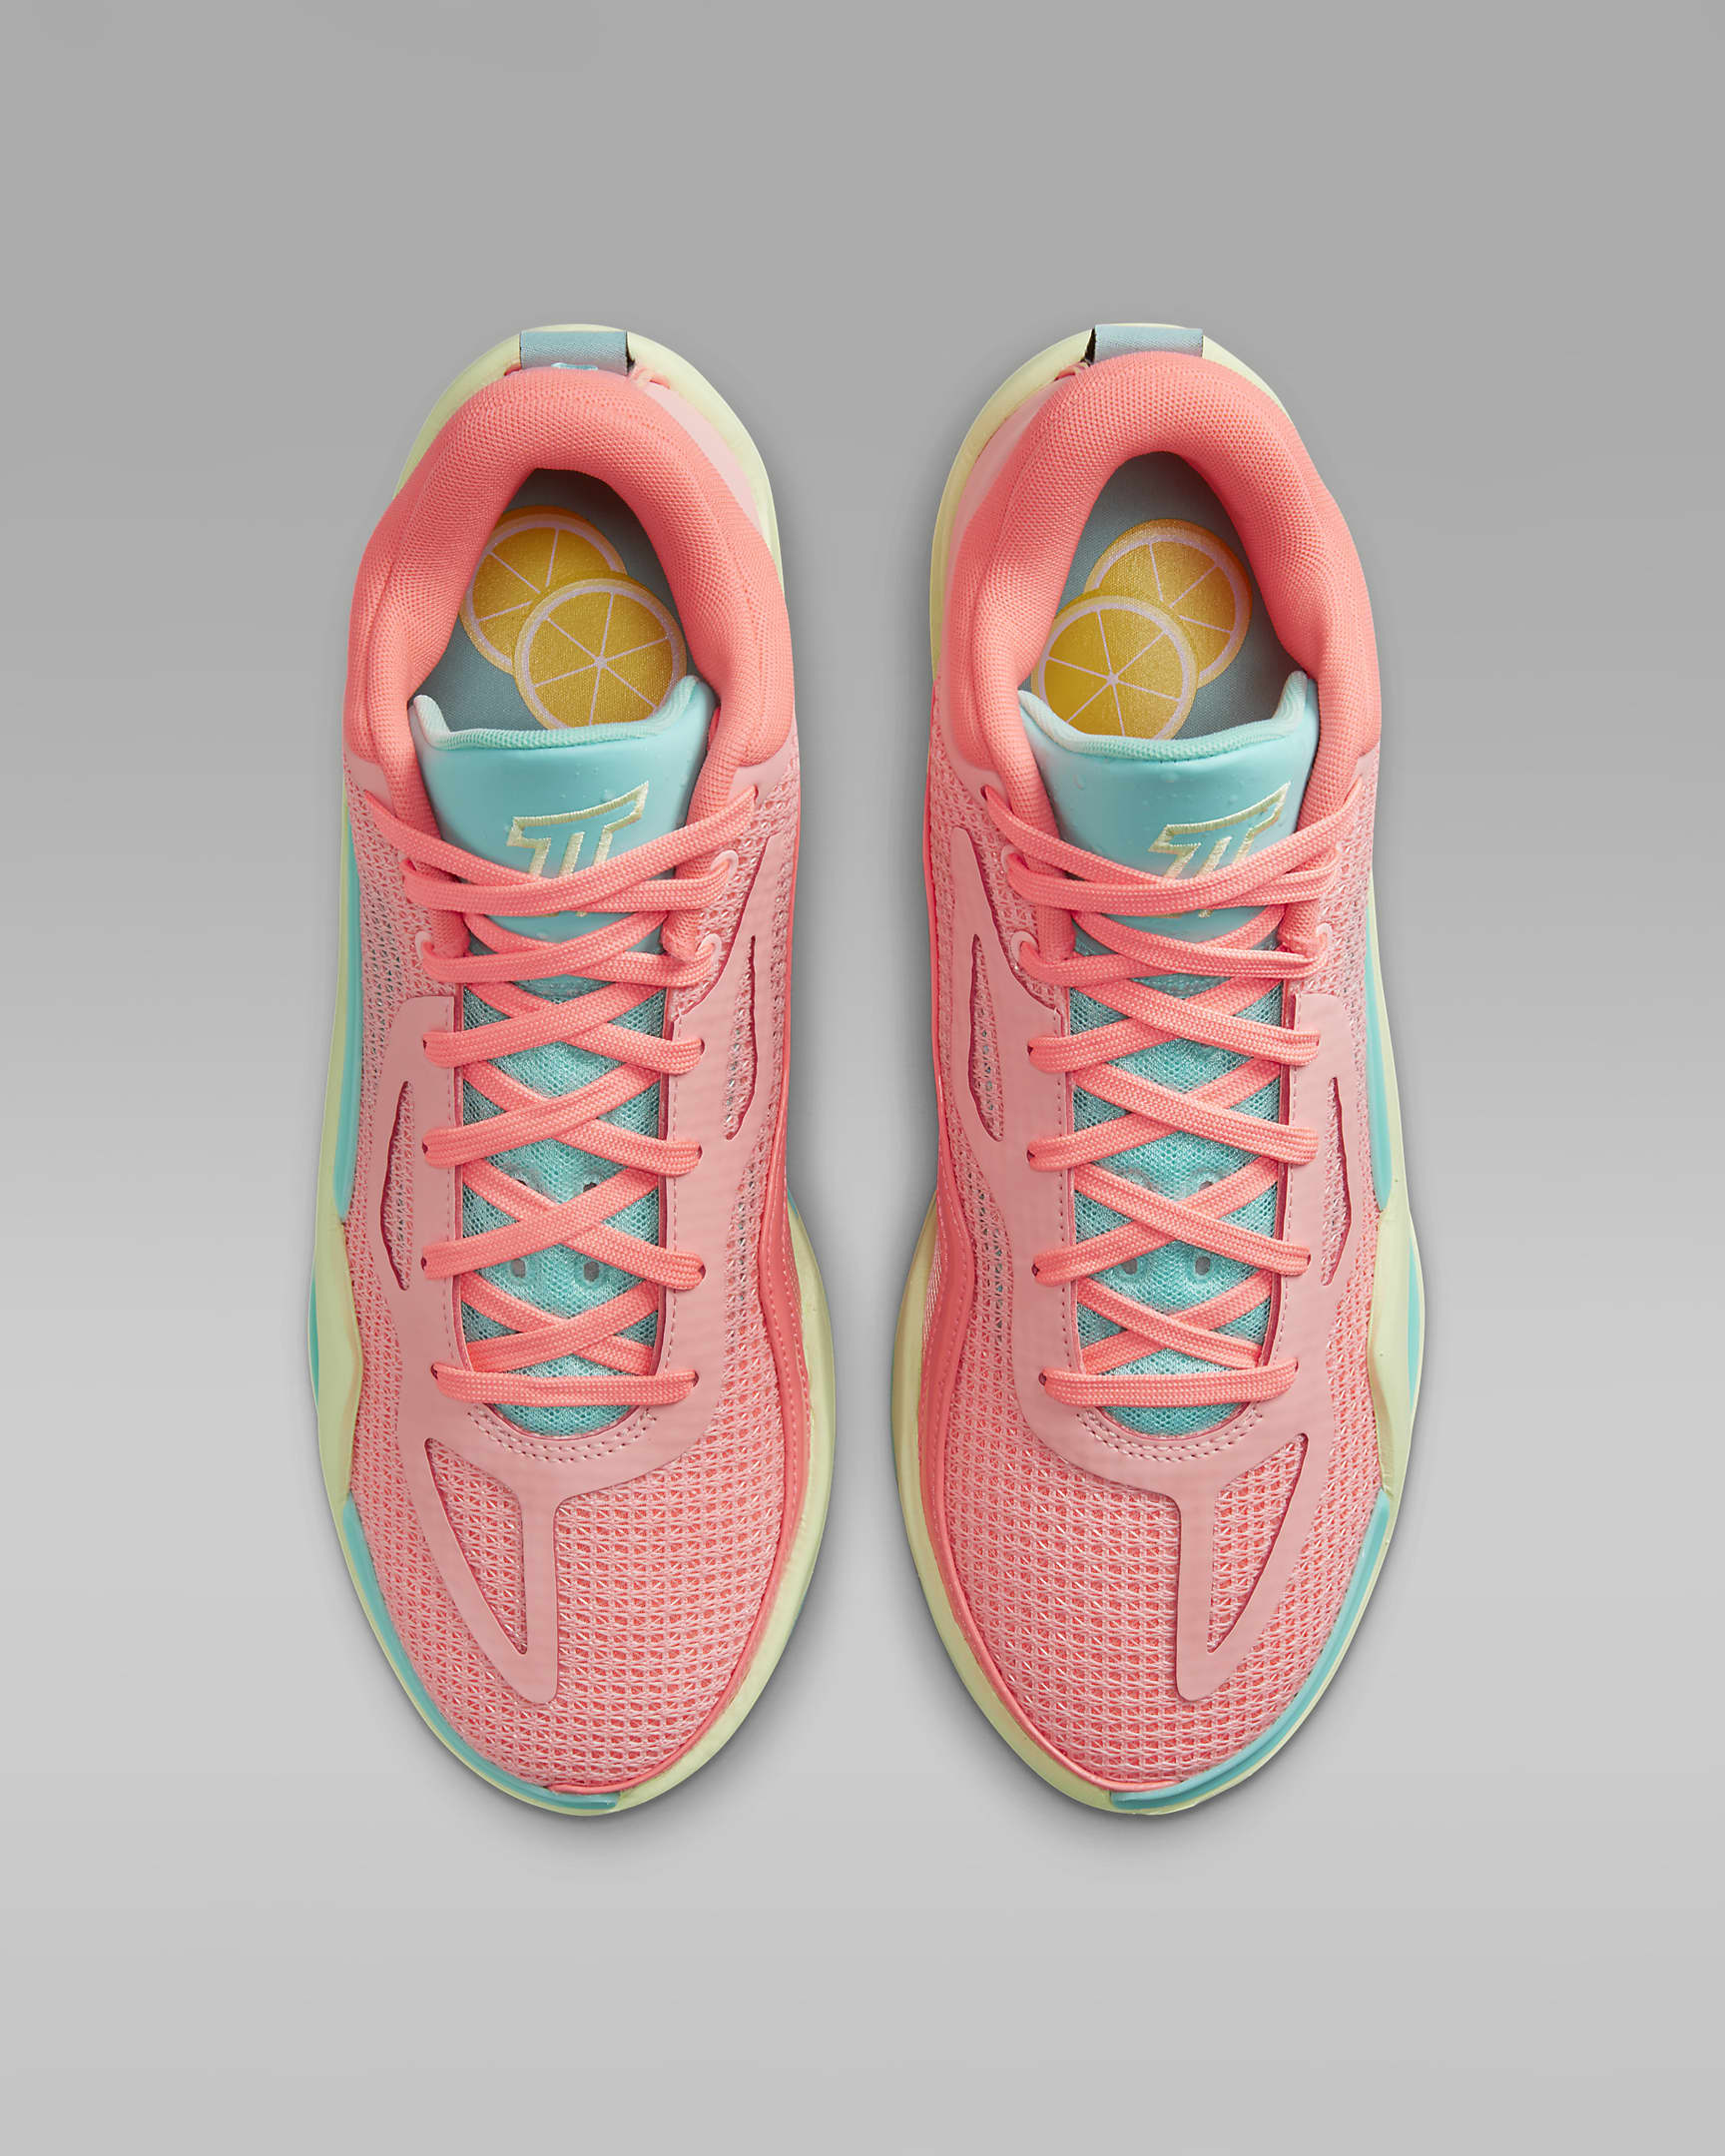 Tatum 1 'Pink Lemonade' Basketball Shoes. Nike DK